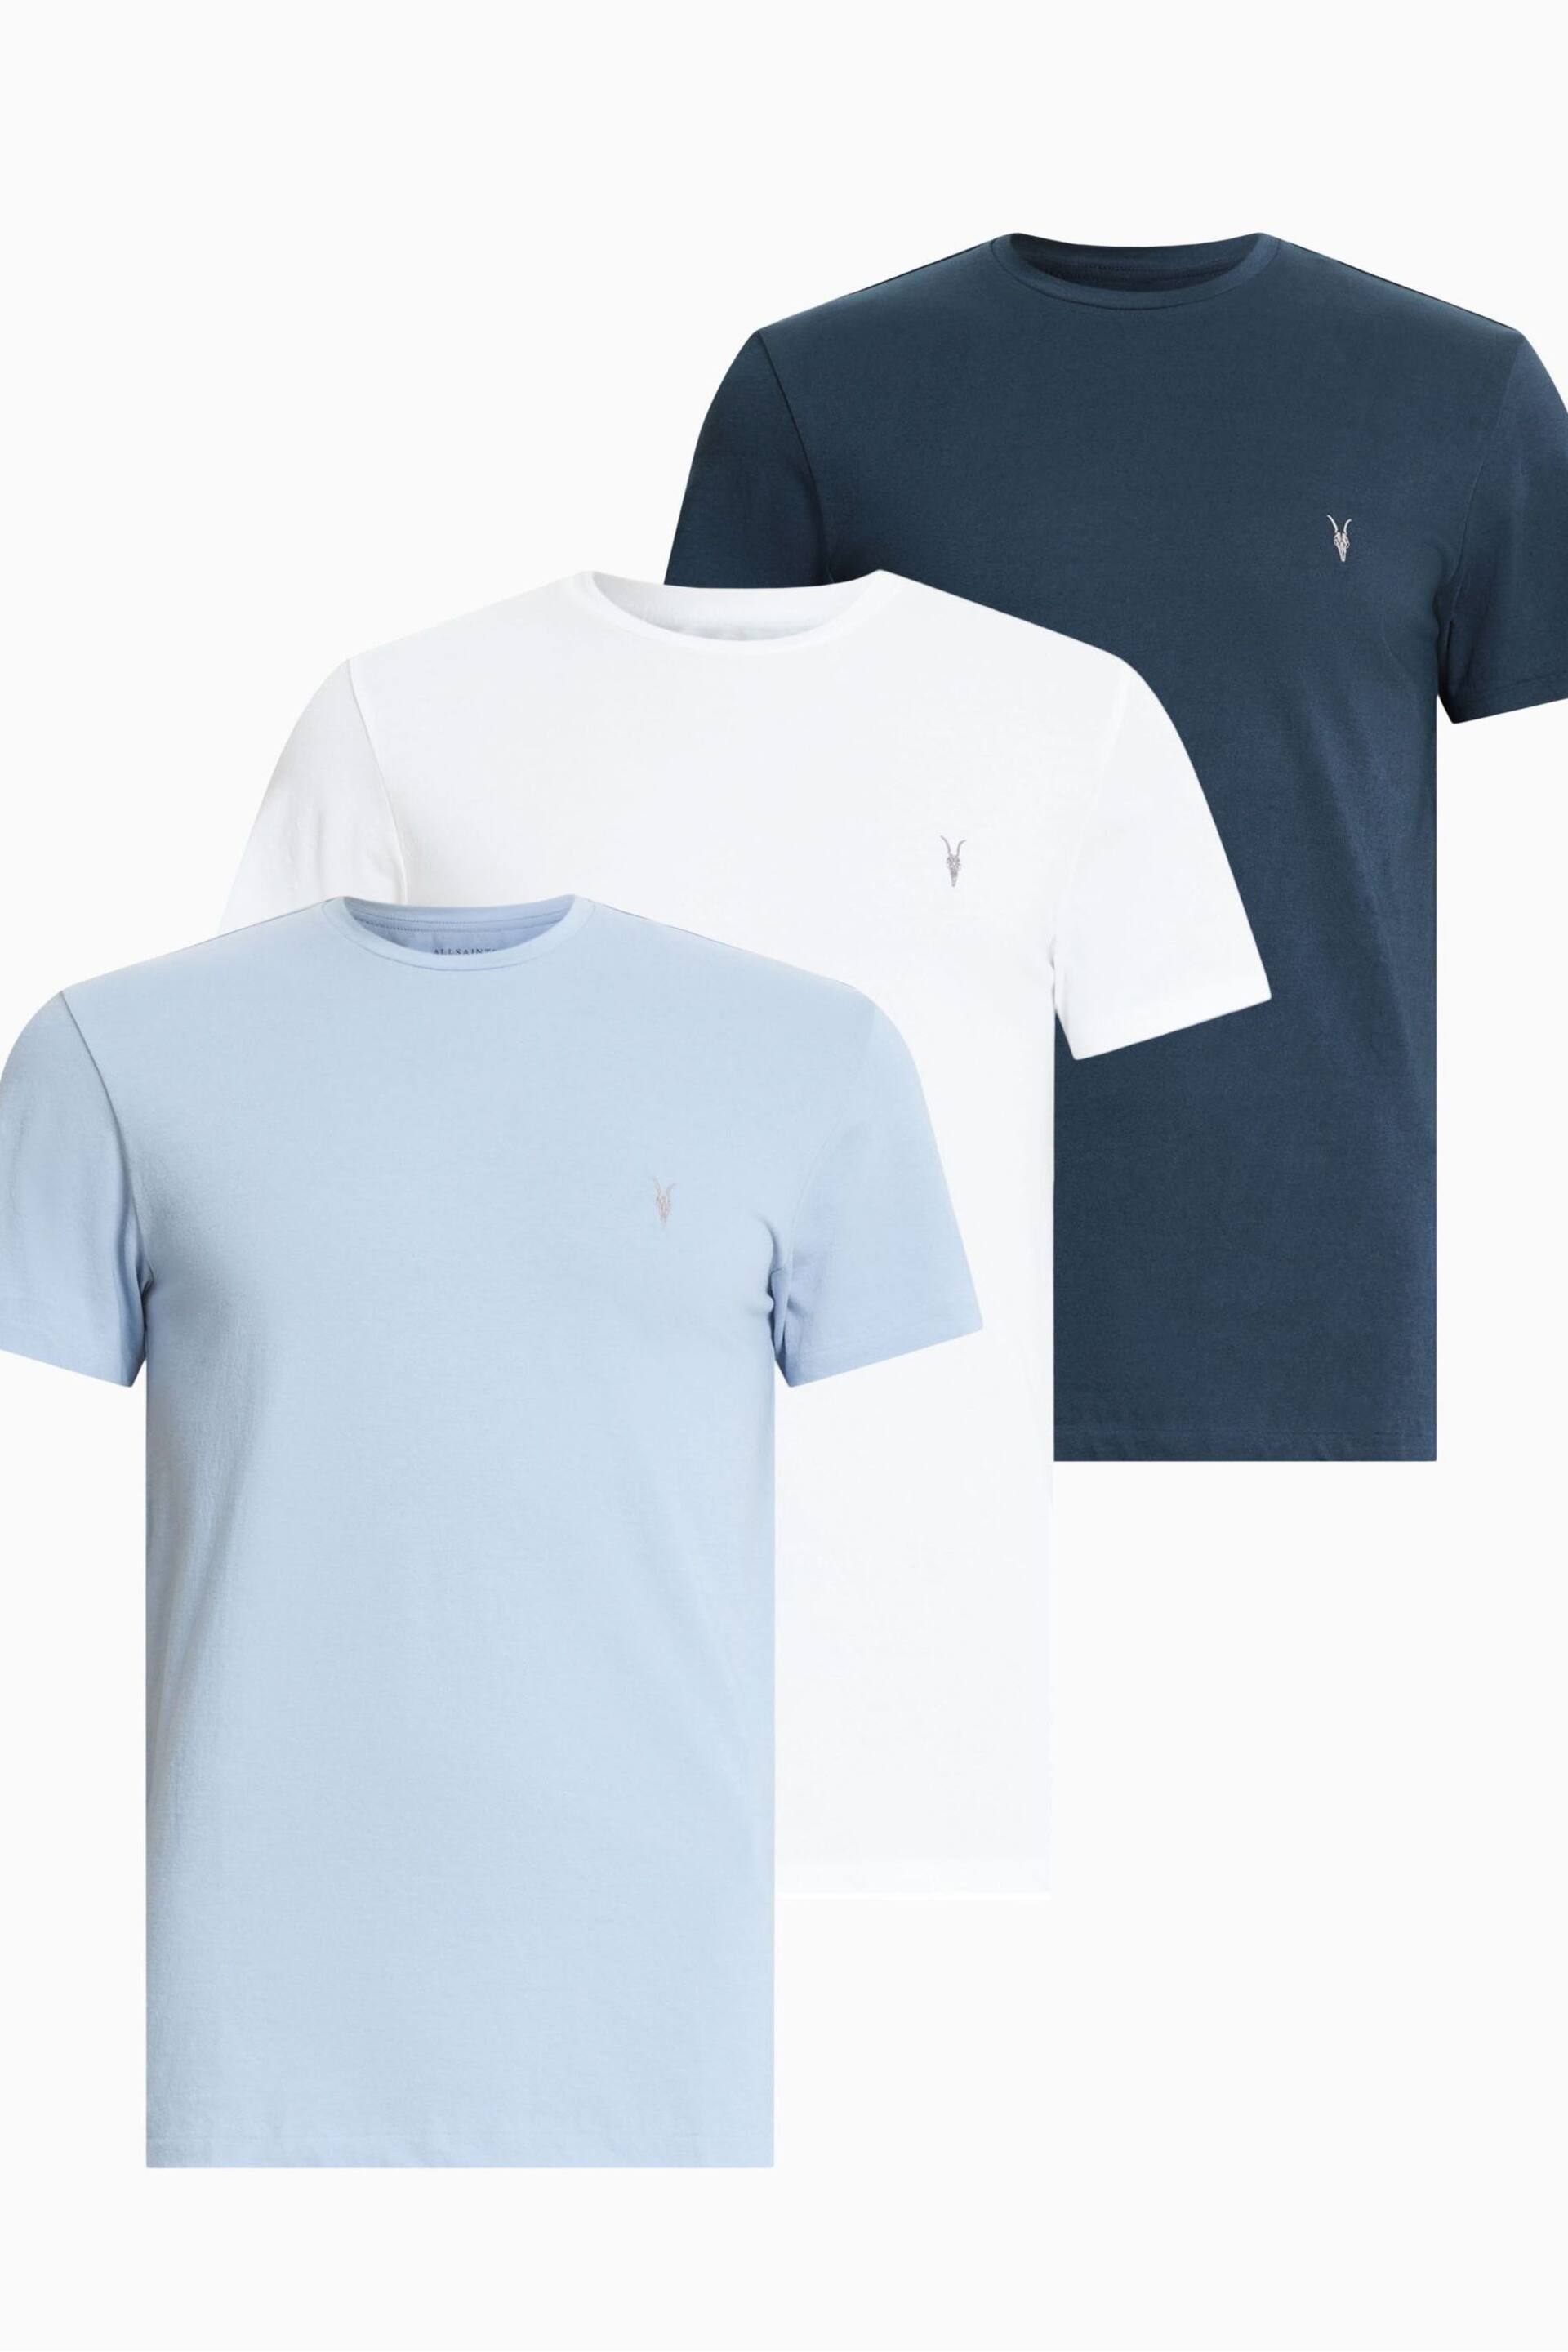 AllSaints White Tonic Short Sleeve Crew T-Shirt 3 Pack - Image 1 of 8